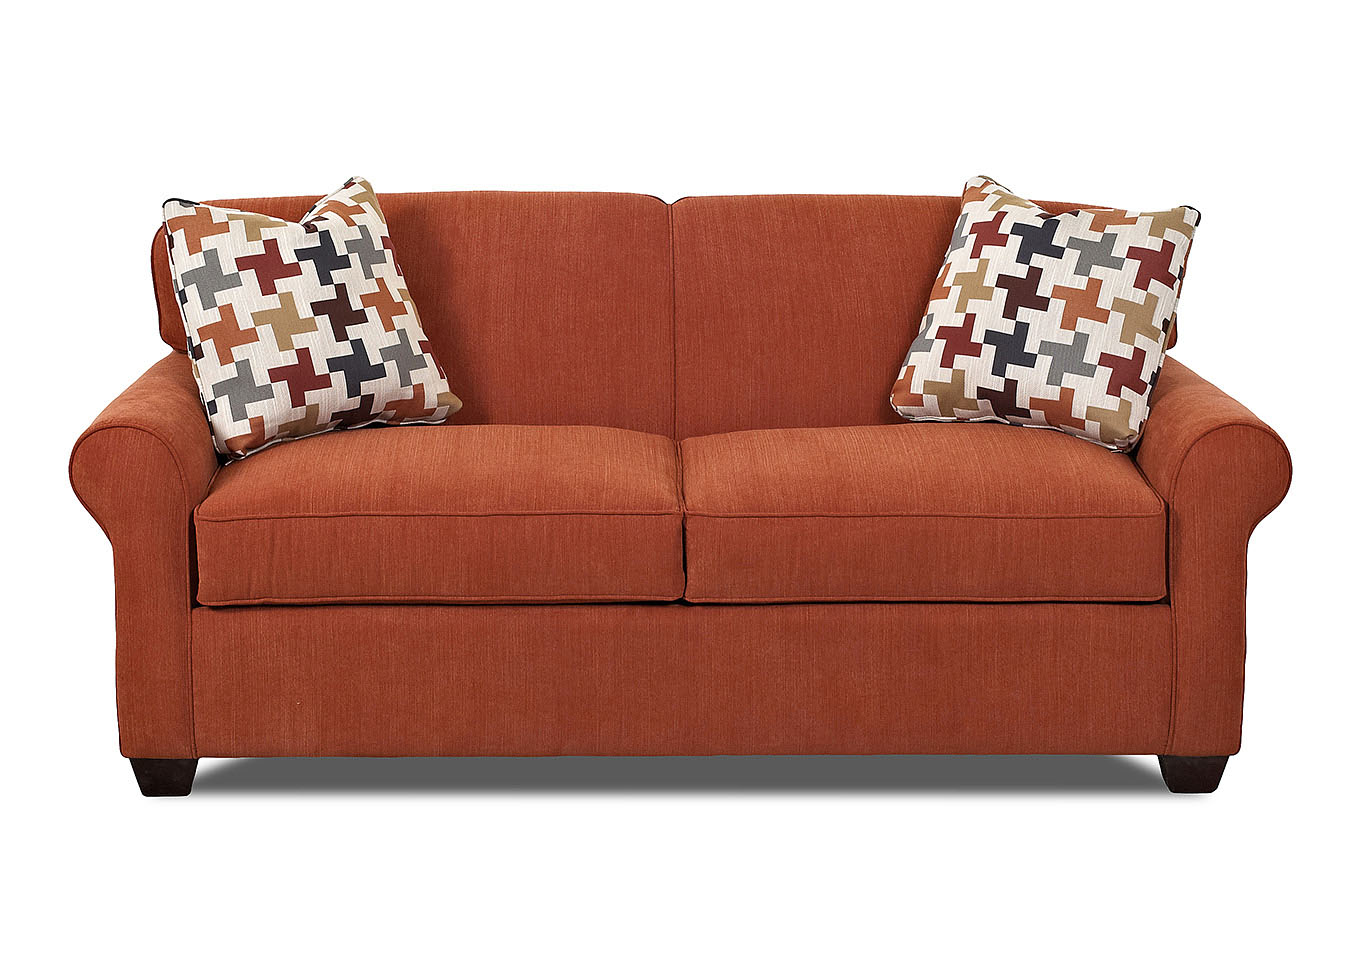 Mayhew Red Sleeper Fabric Sofa,Klaussner Home Furnishings